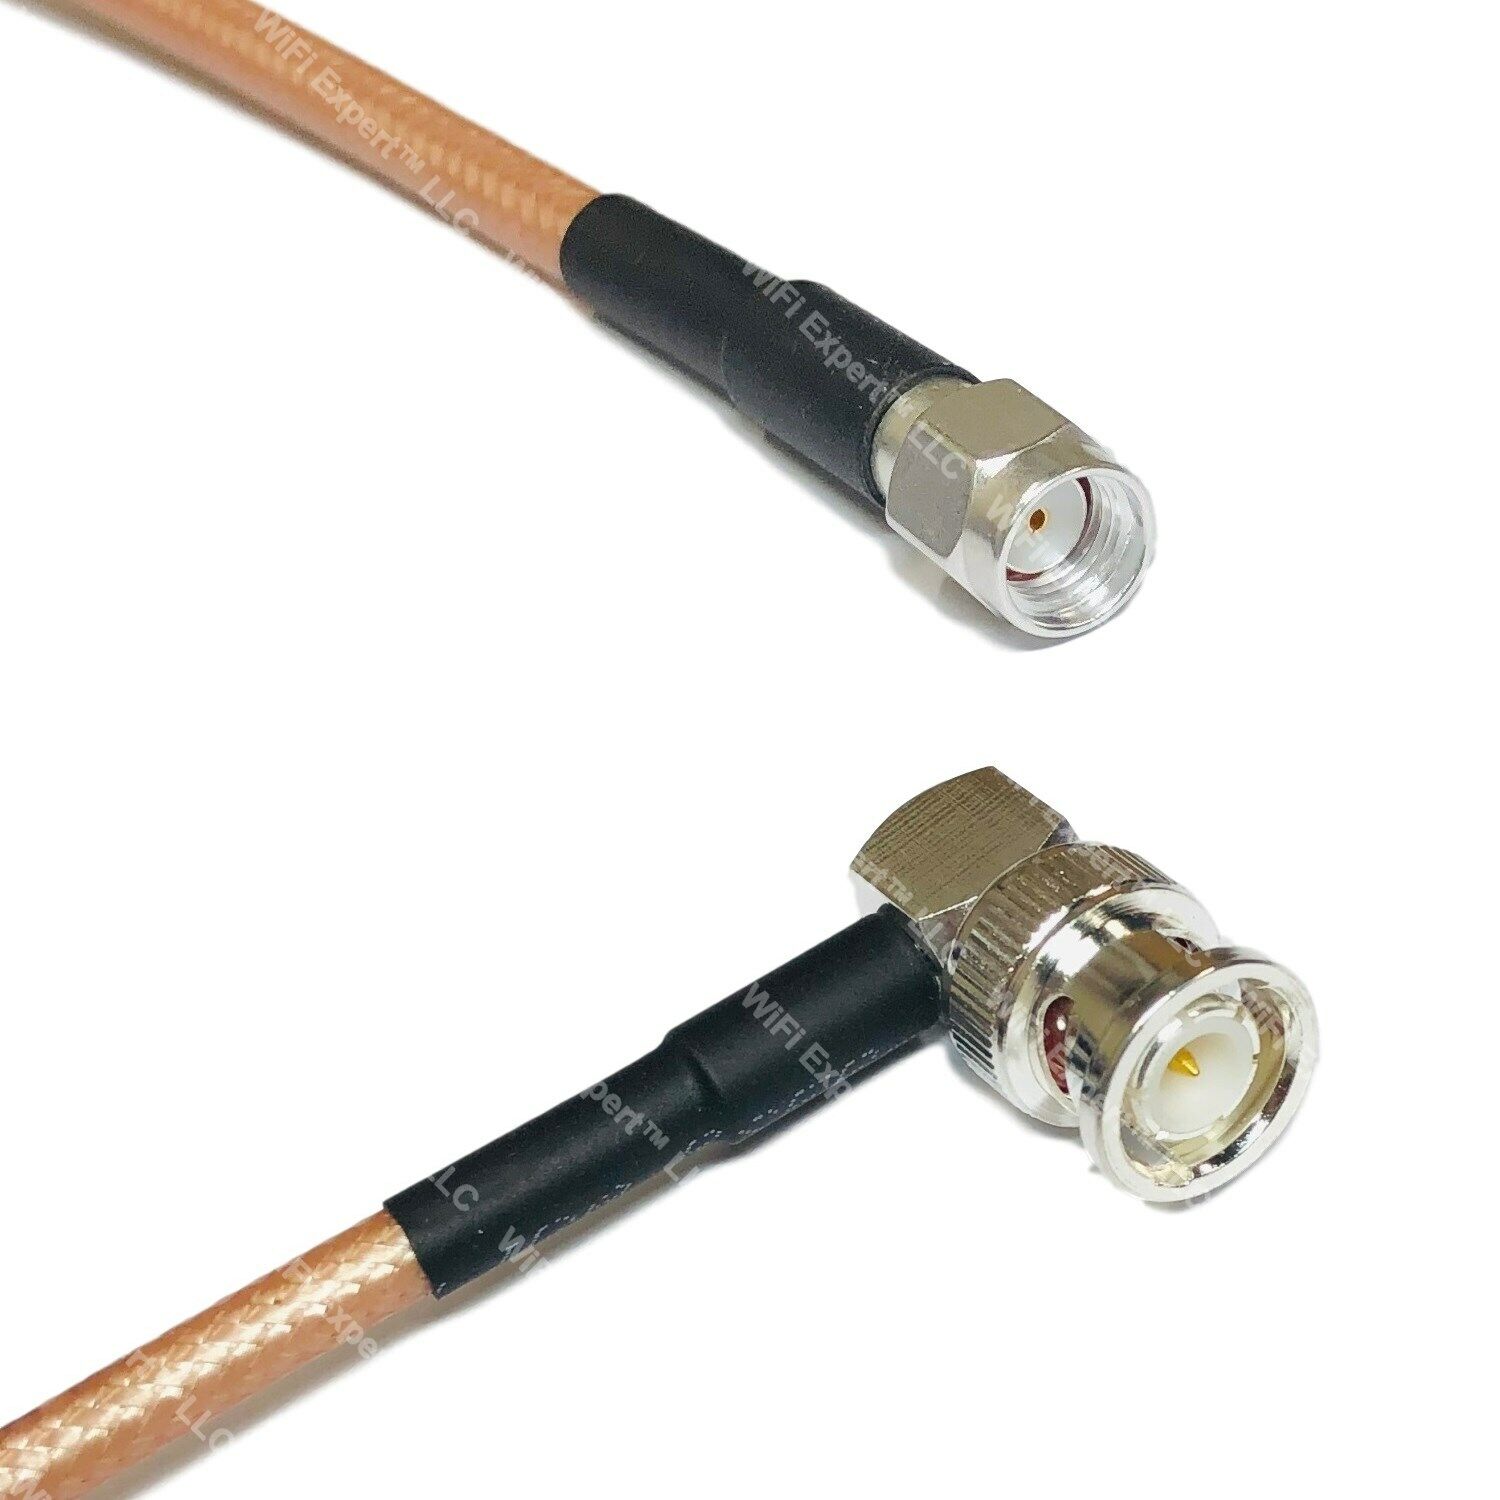 RG142 Silver RP-SMA MALE to BNC MALE ANGLE Coax RF Cable USA Lot Super popularność rabatowa